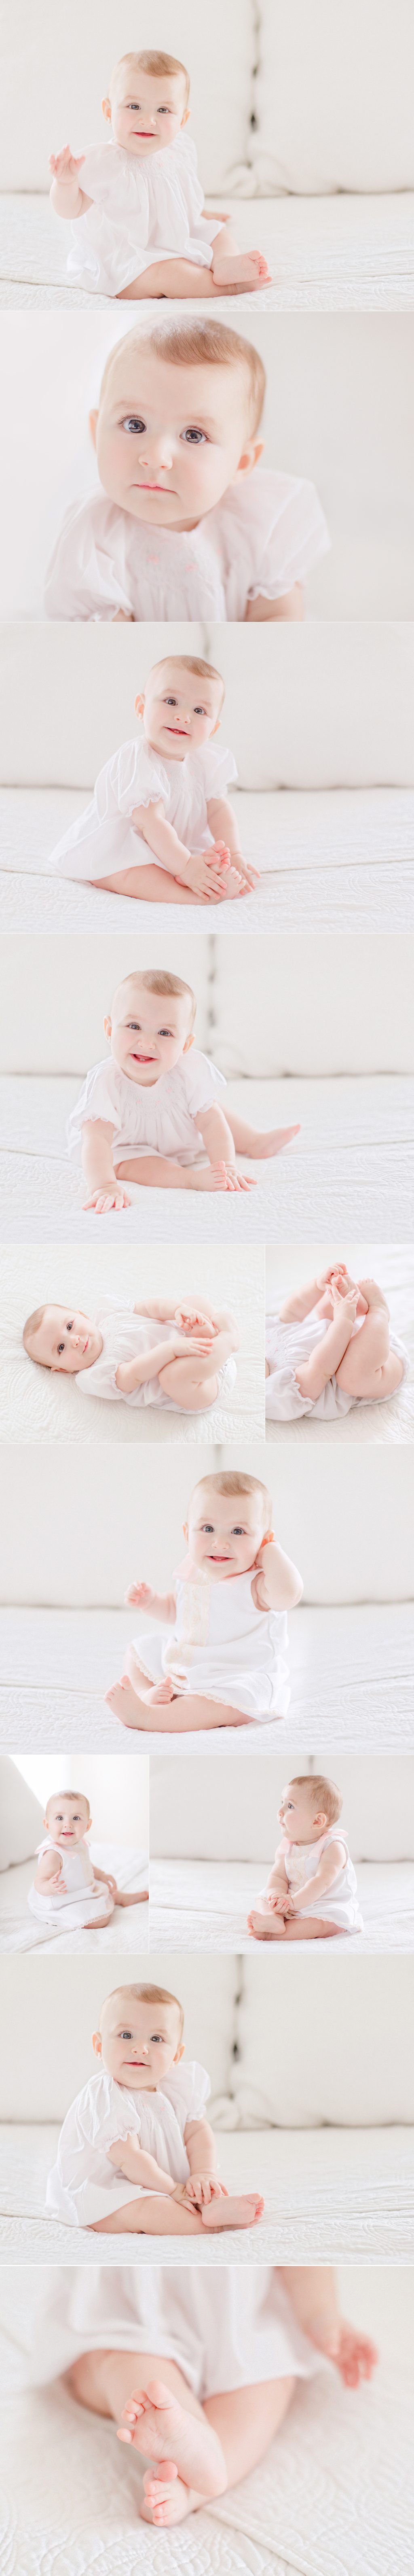 Athens, GA eight month sitting milestone baby photo session.